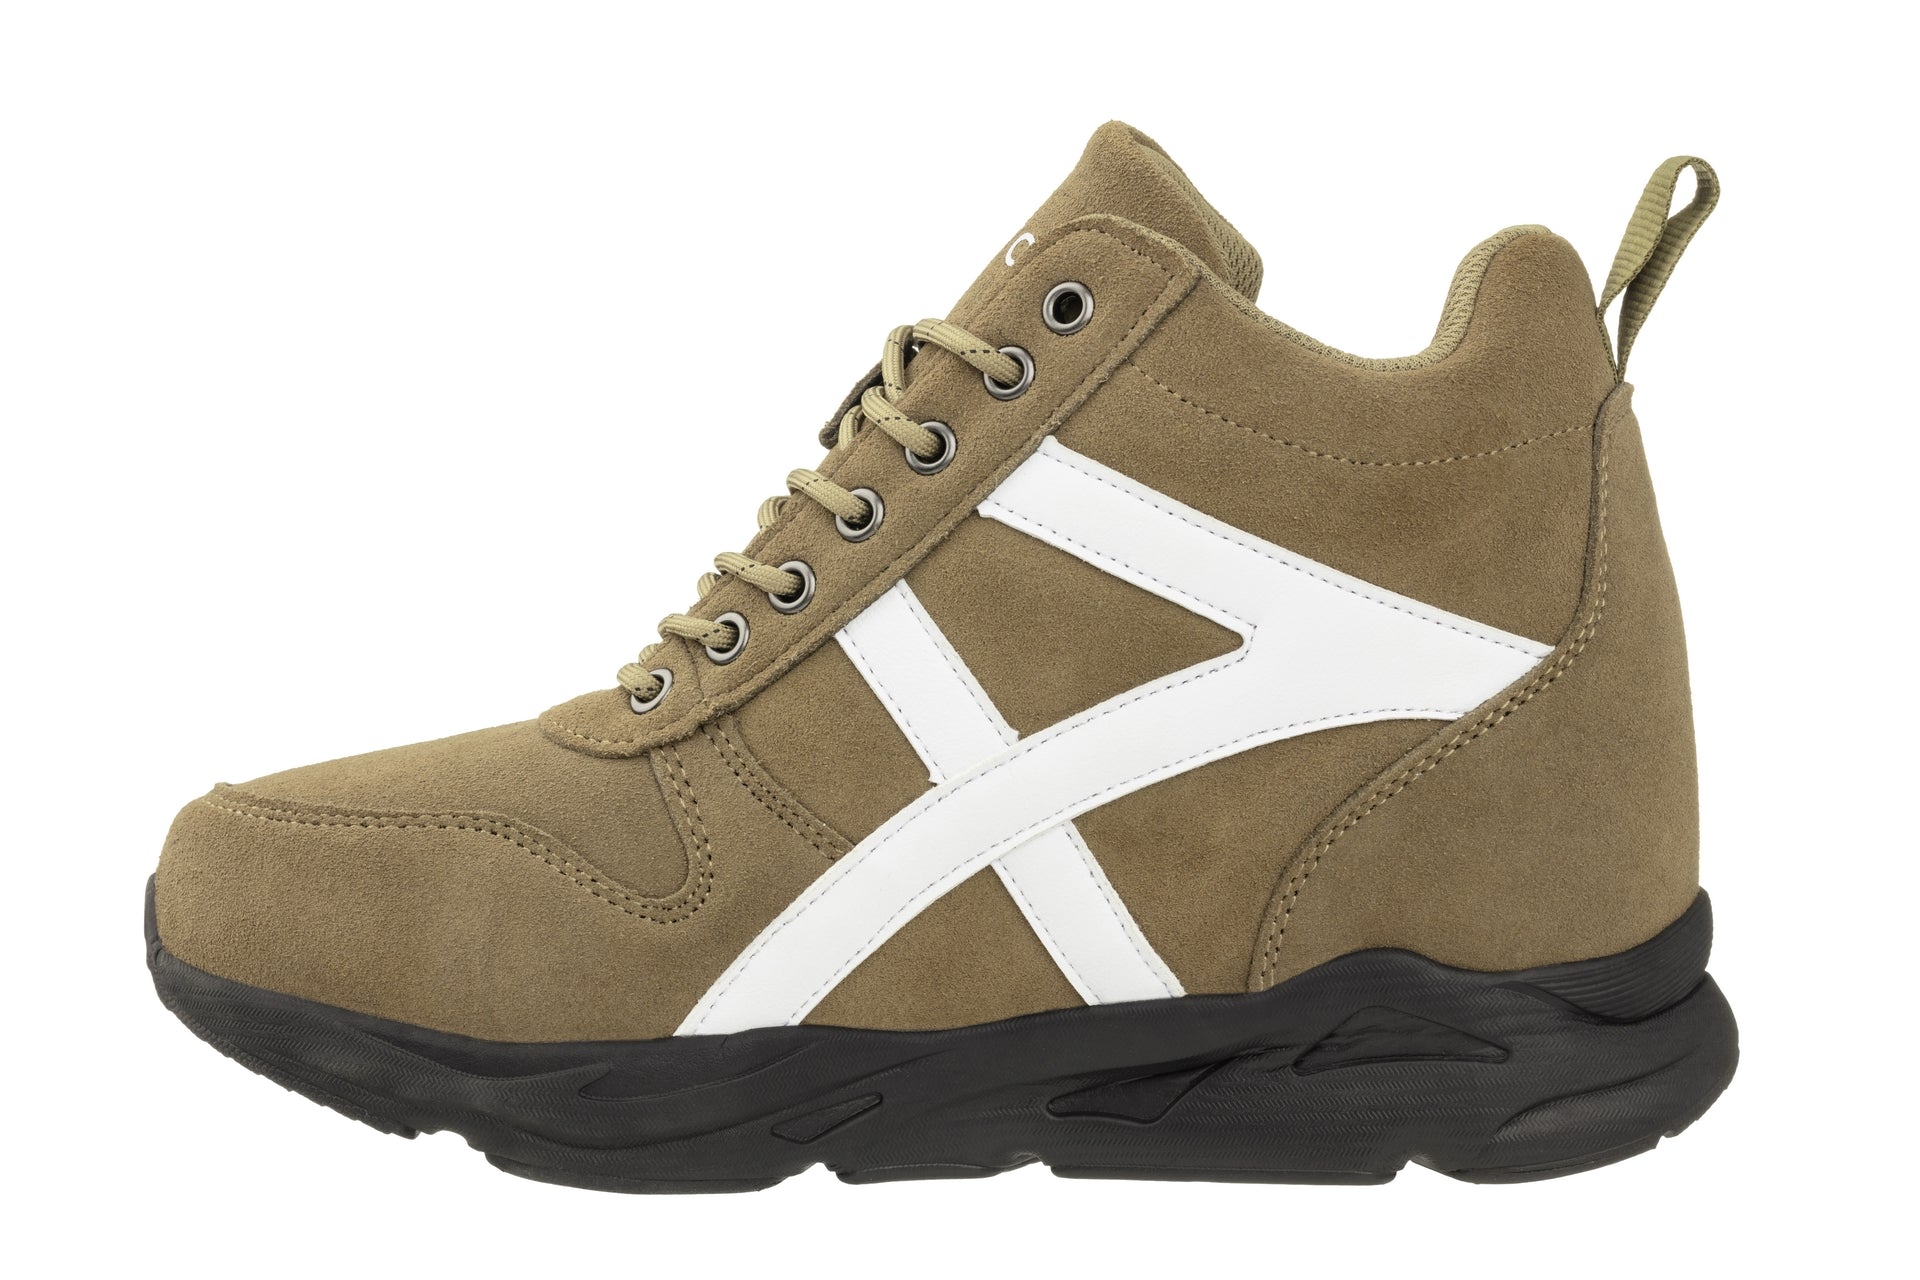 CALTO - S22782 - 3.6 Inches Taller (Khaki/White) - Hiking Style Boots